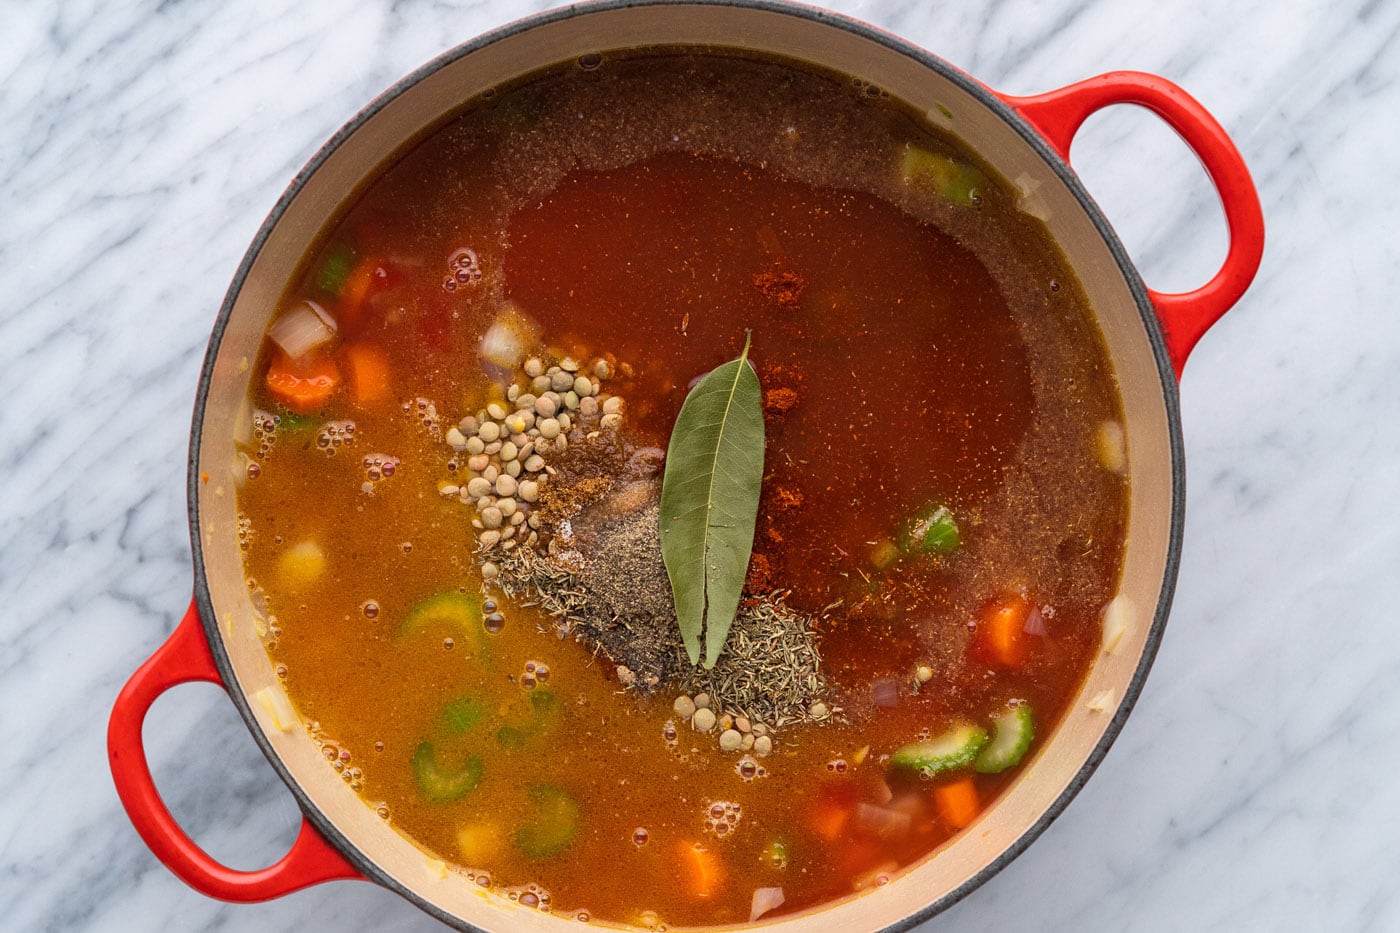 seasonings on top of lentil soup in a pot